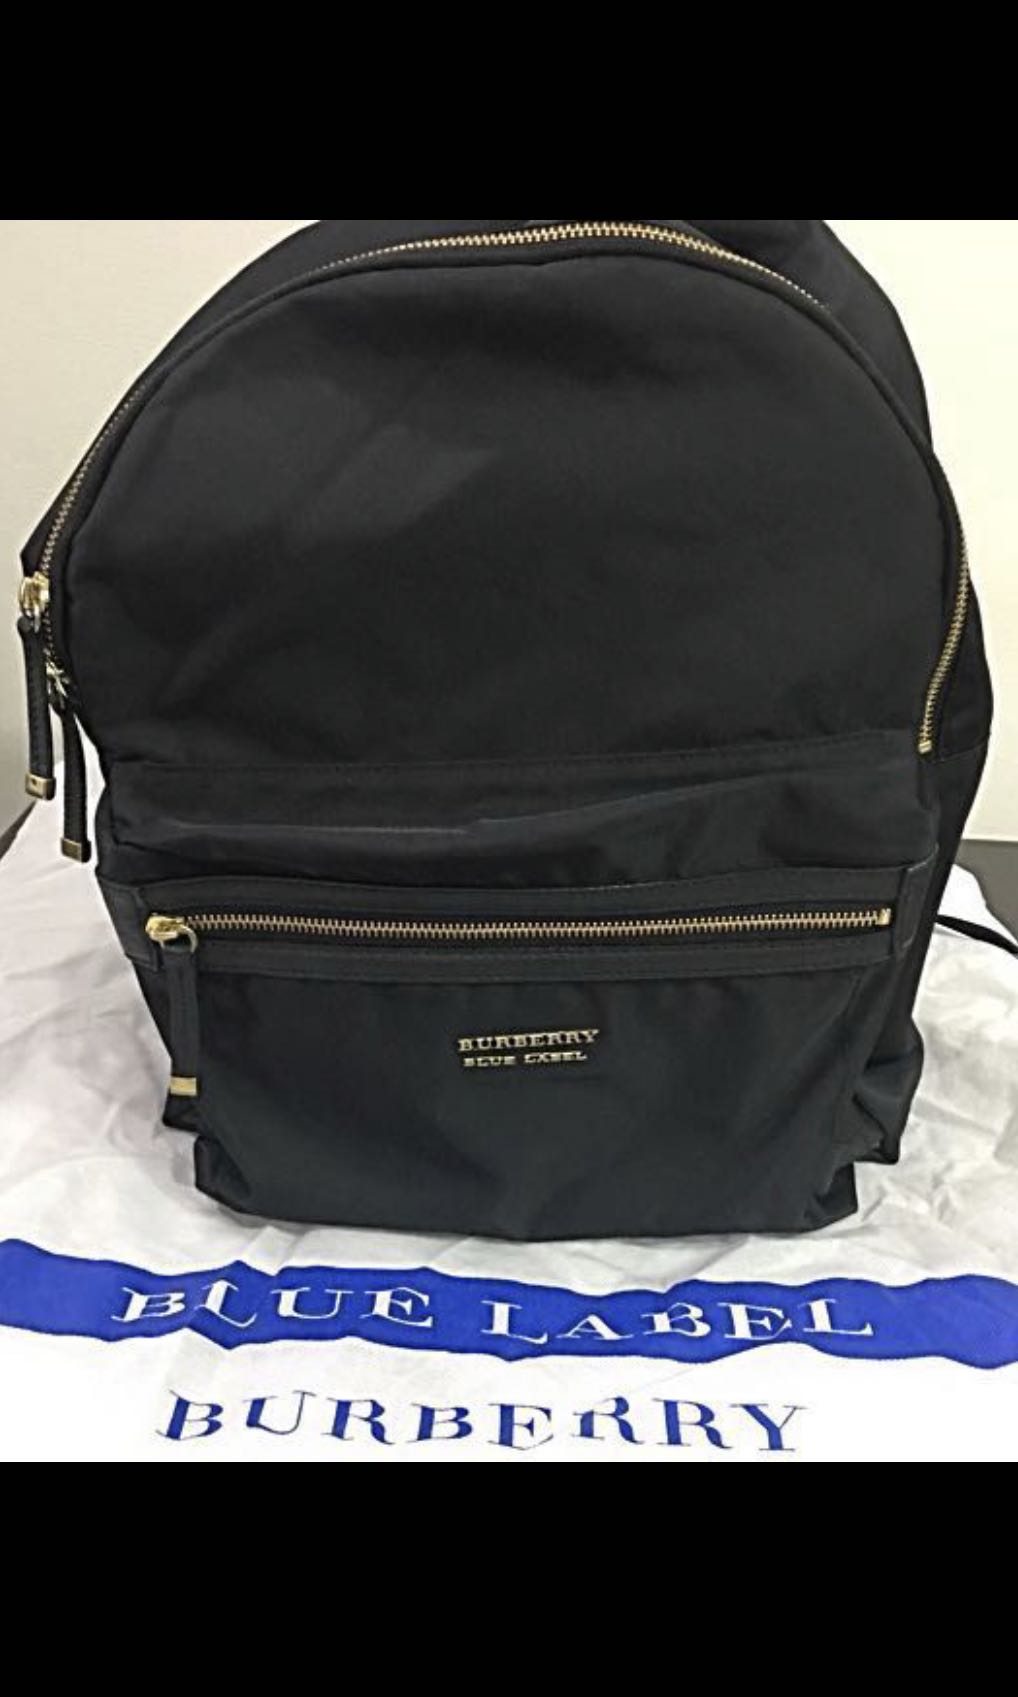 burberry blue label backpack